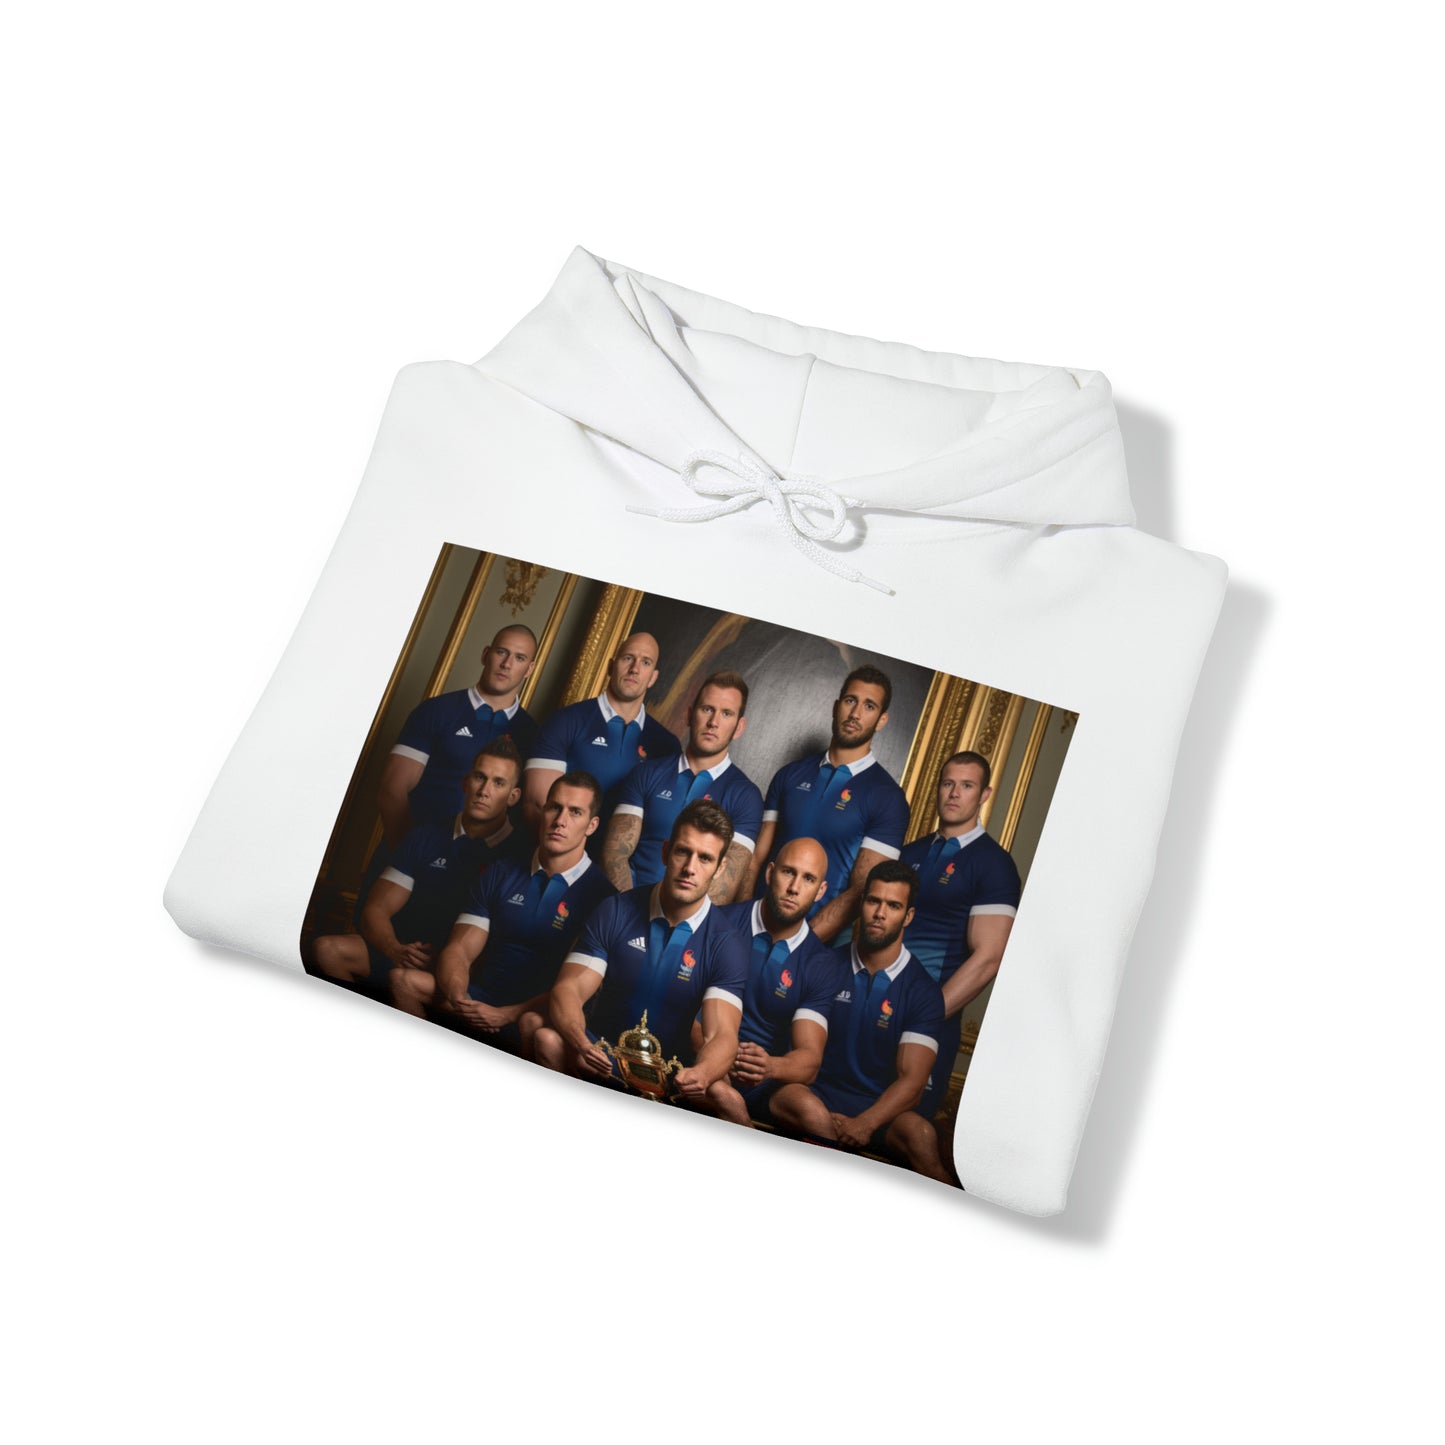 France World Cup Photoshoot - light hoodies